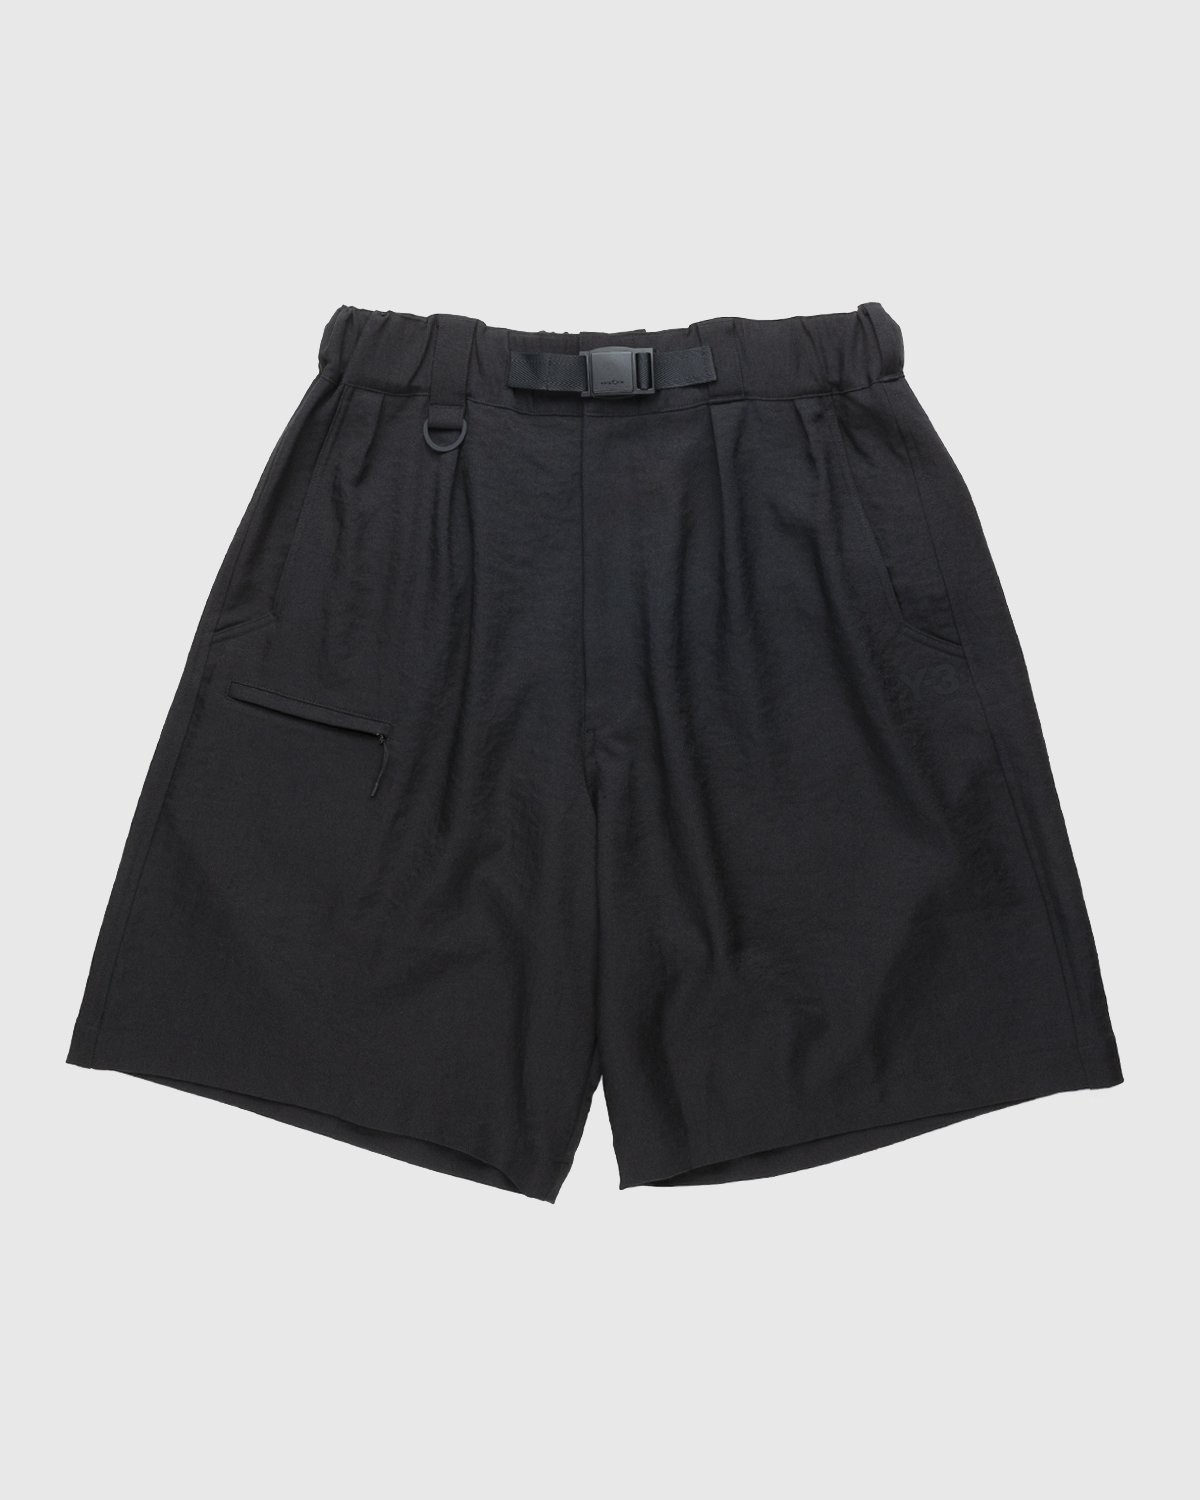 Y-3 – Classic Sport Uniform Shorts Black | Highsnobiety Shop